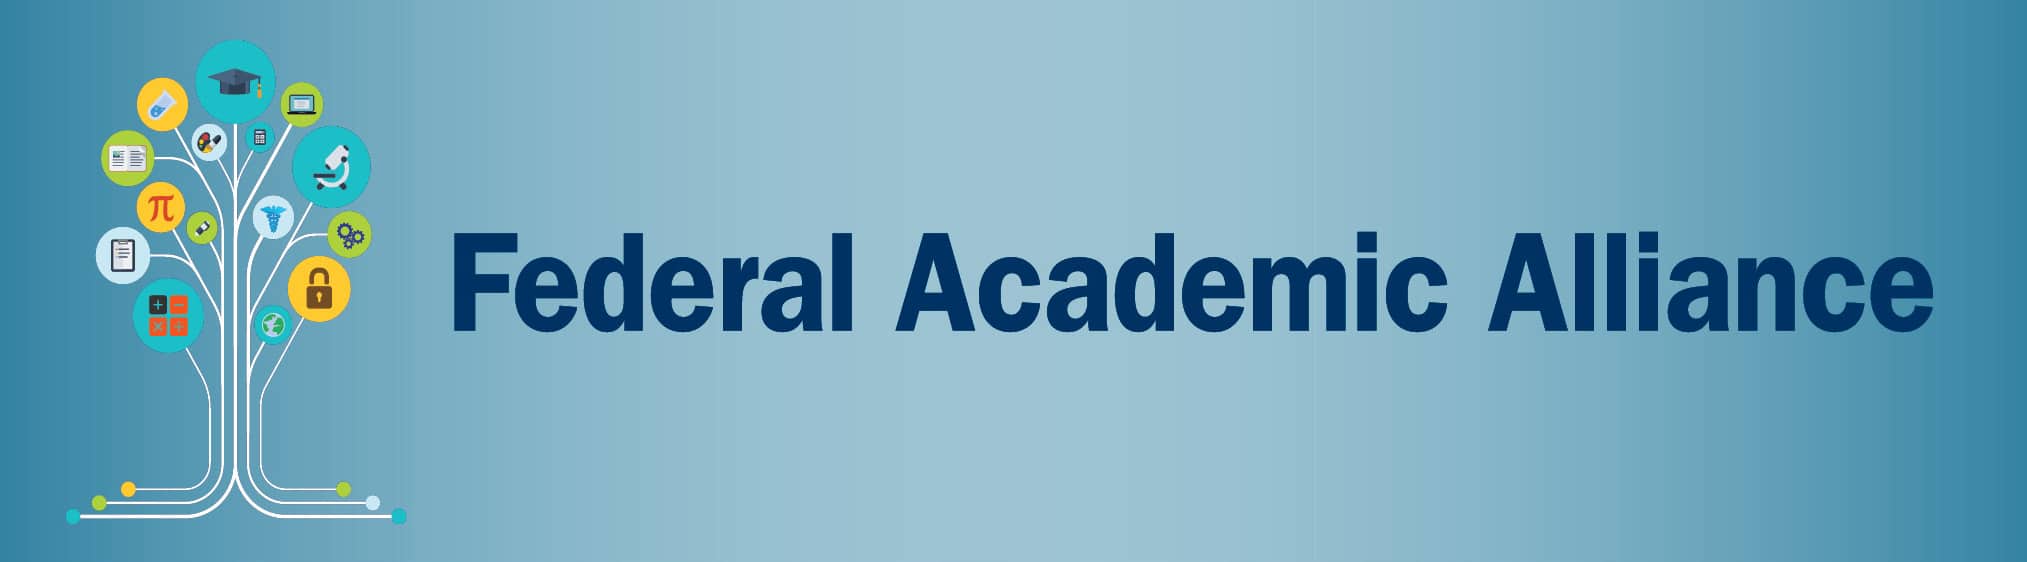 Federal Academic Alliance logo